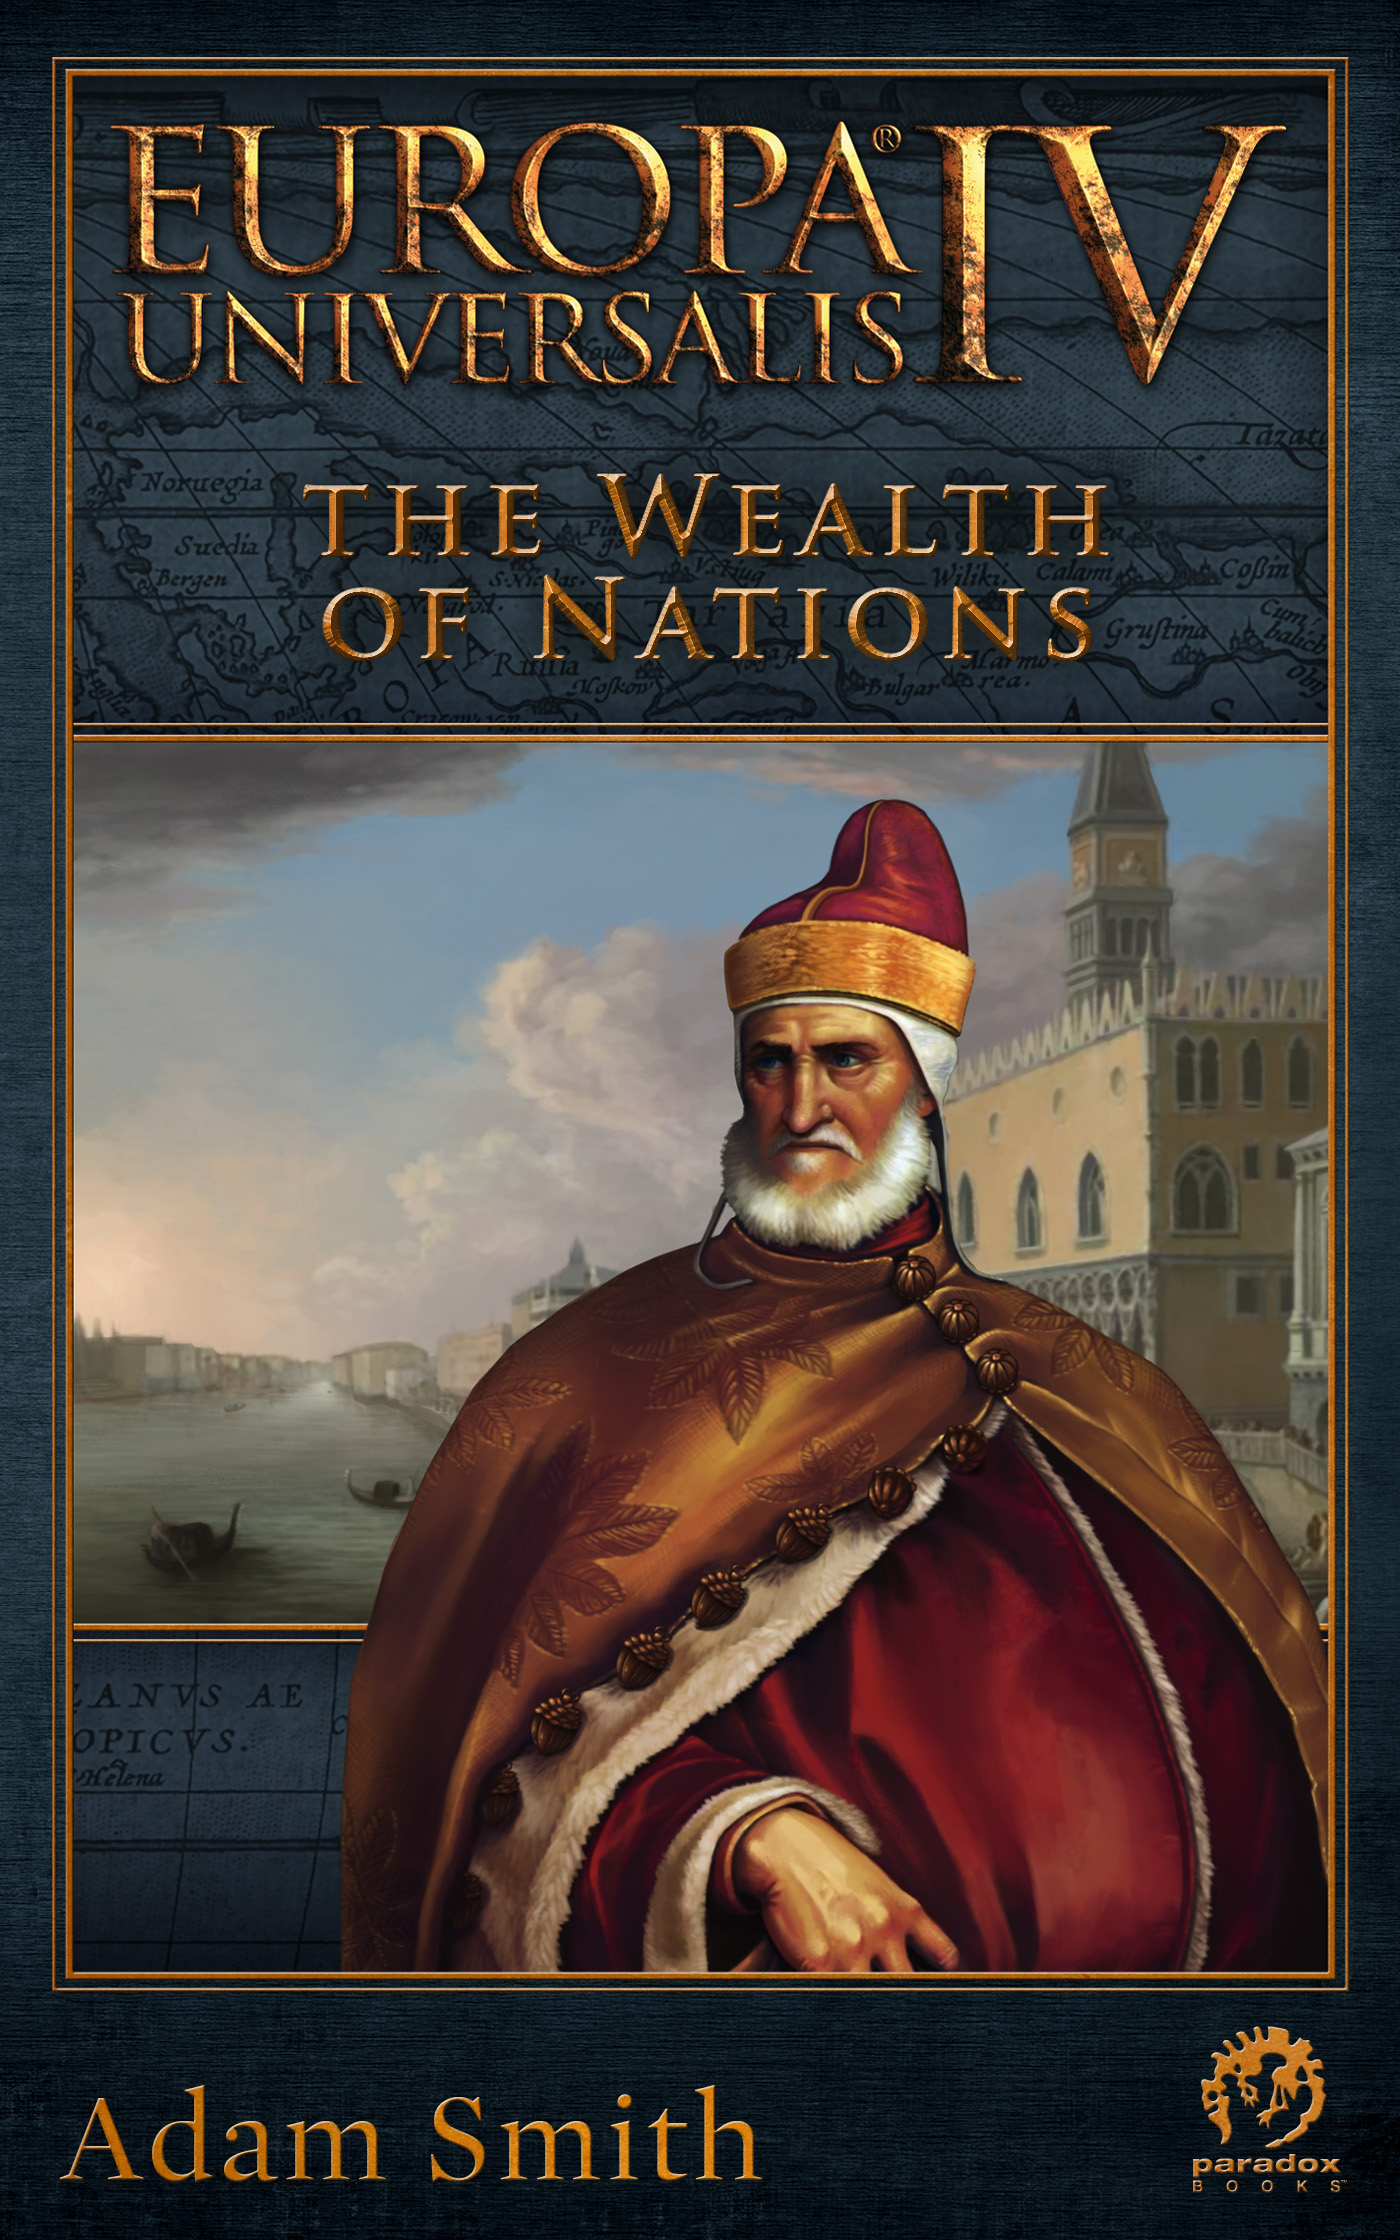 Europa Universalis IV: Wealth of Nations E-book screenshot